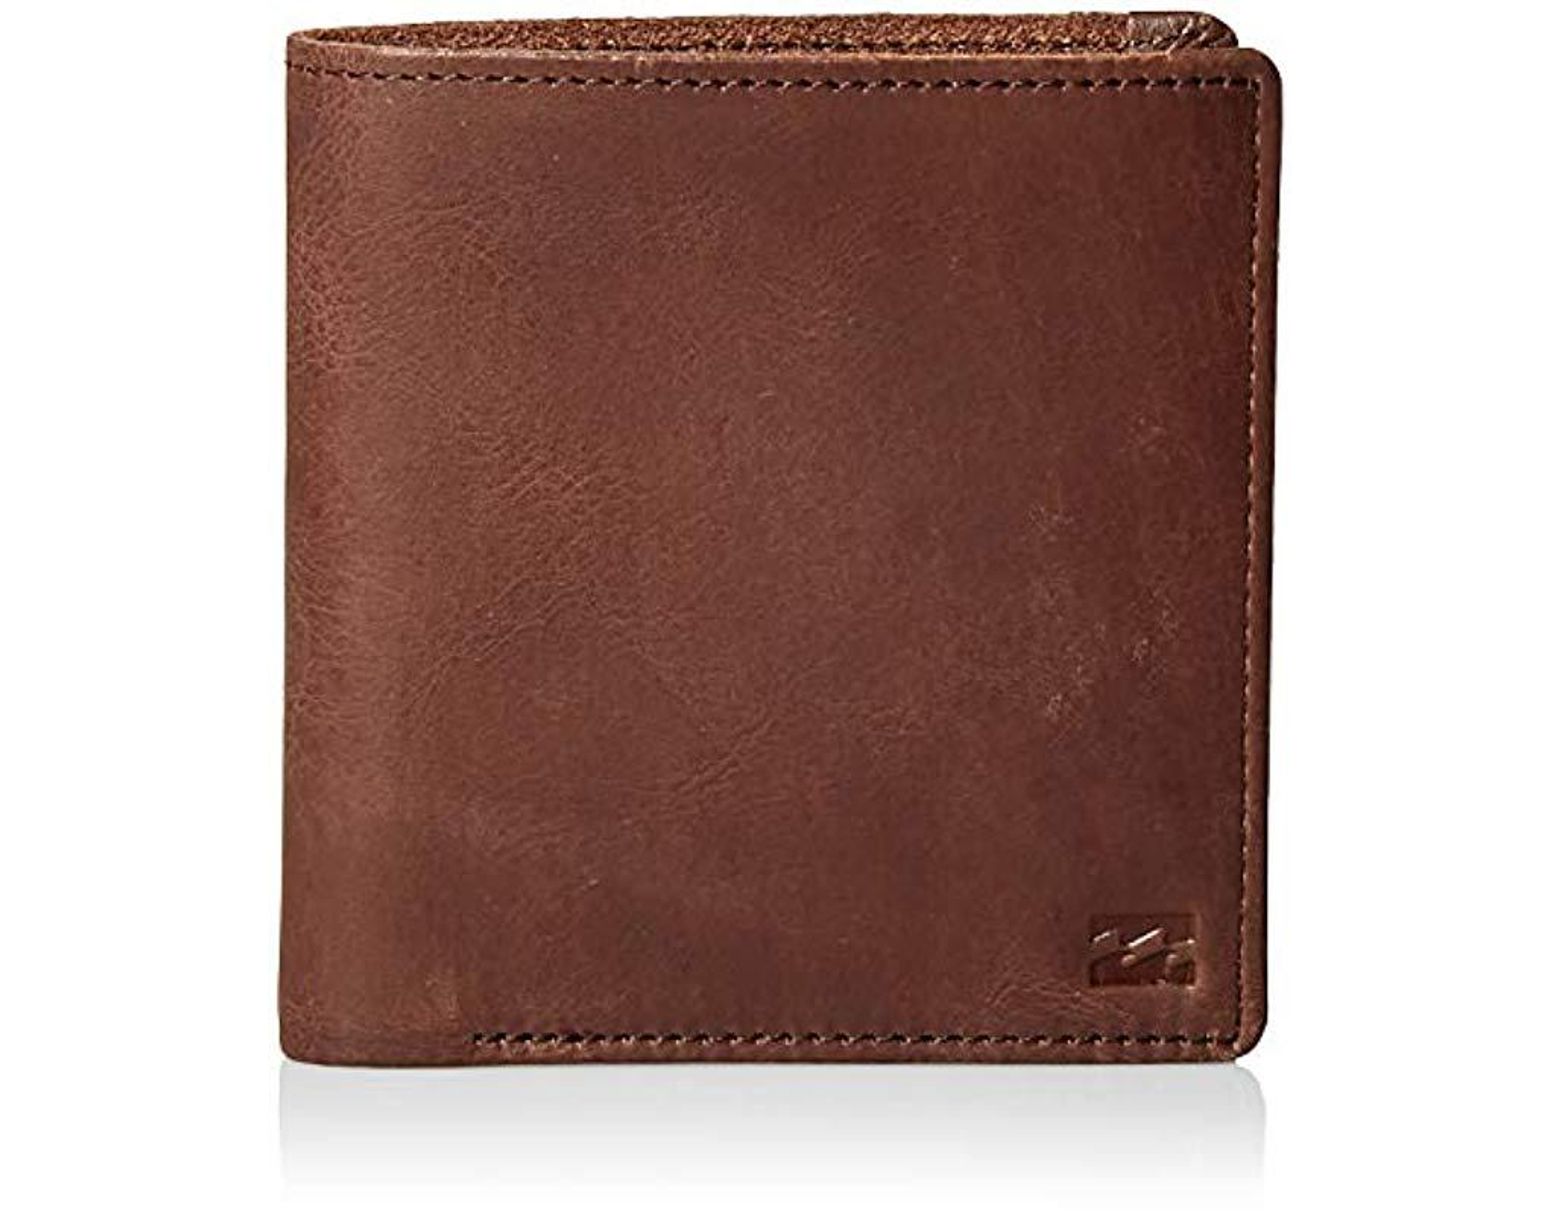 Billabong Gaviotas Natural Leather Wallet - Black - Brown wallet